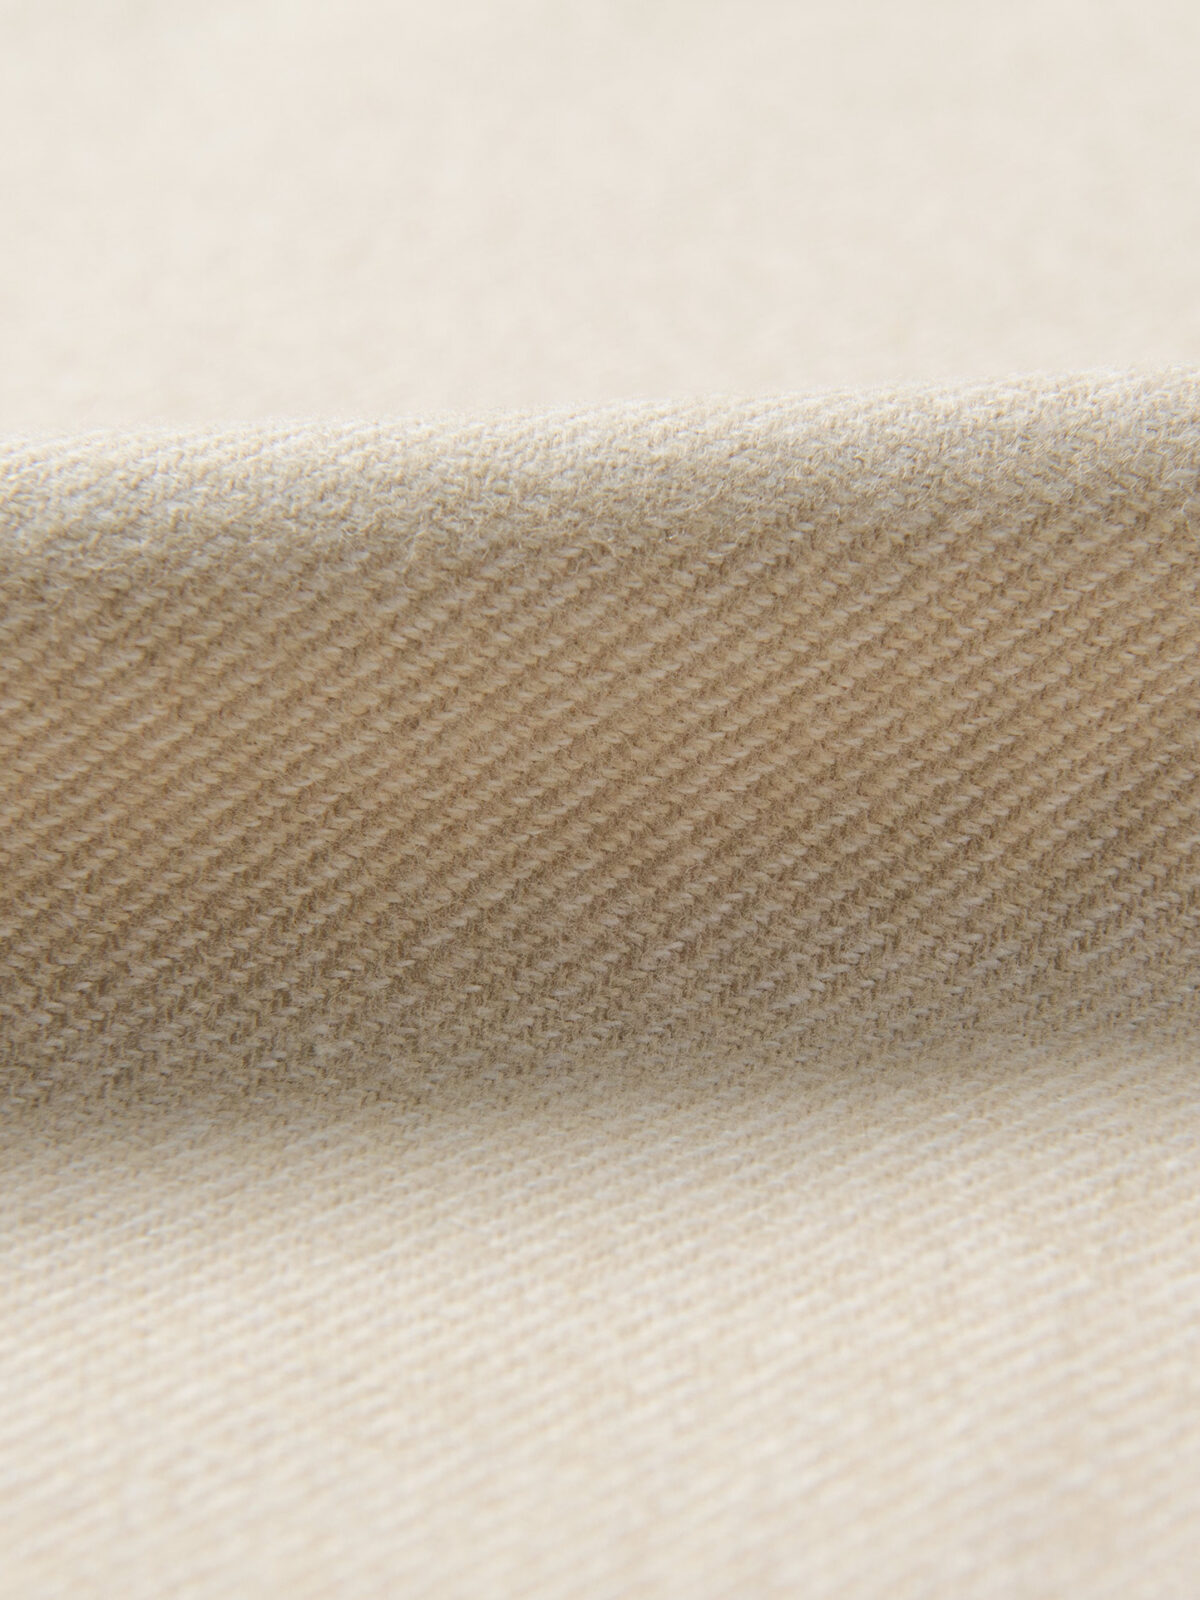 Duck Canvas Fabric - Utility Fabrics